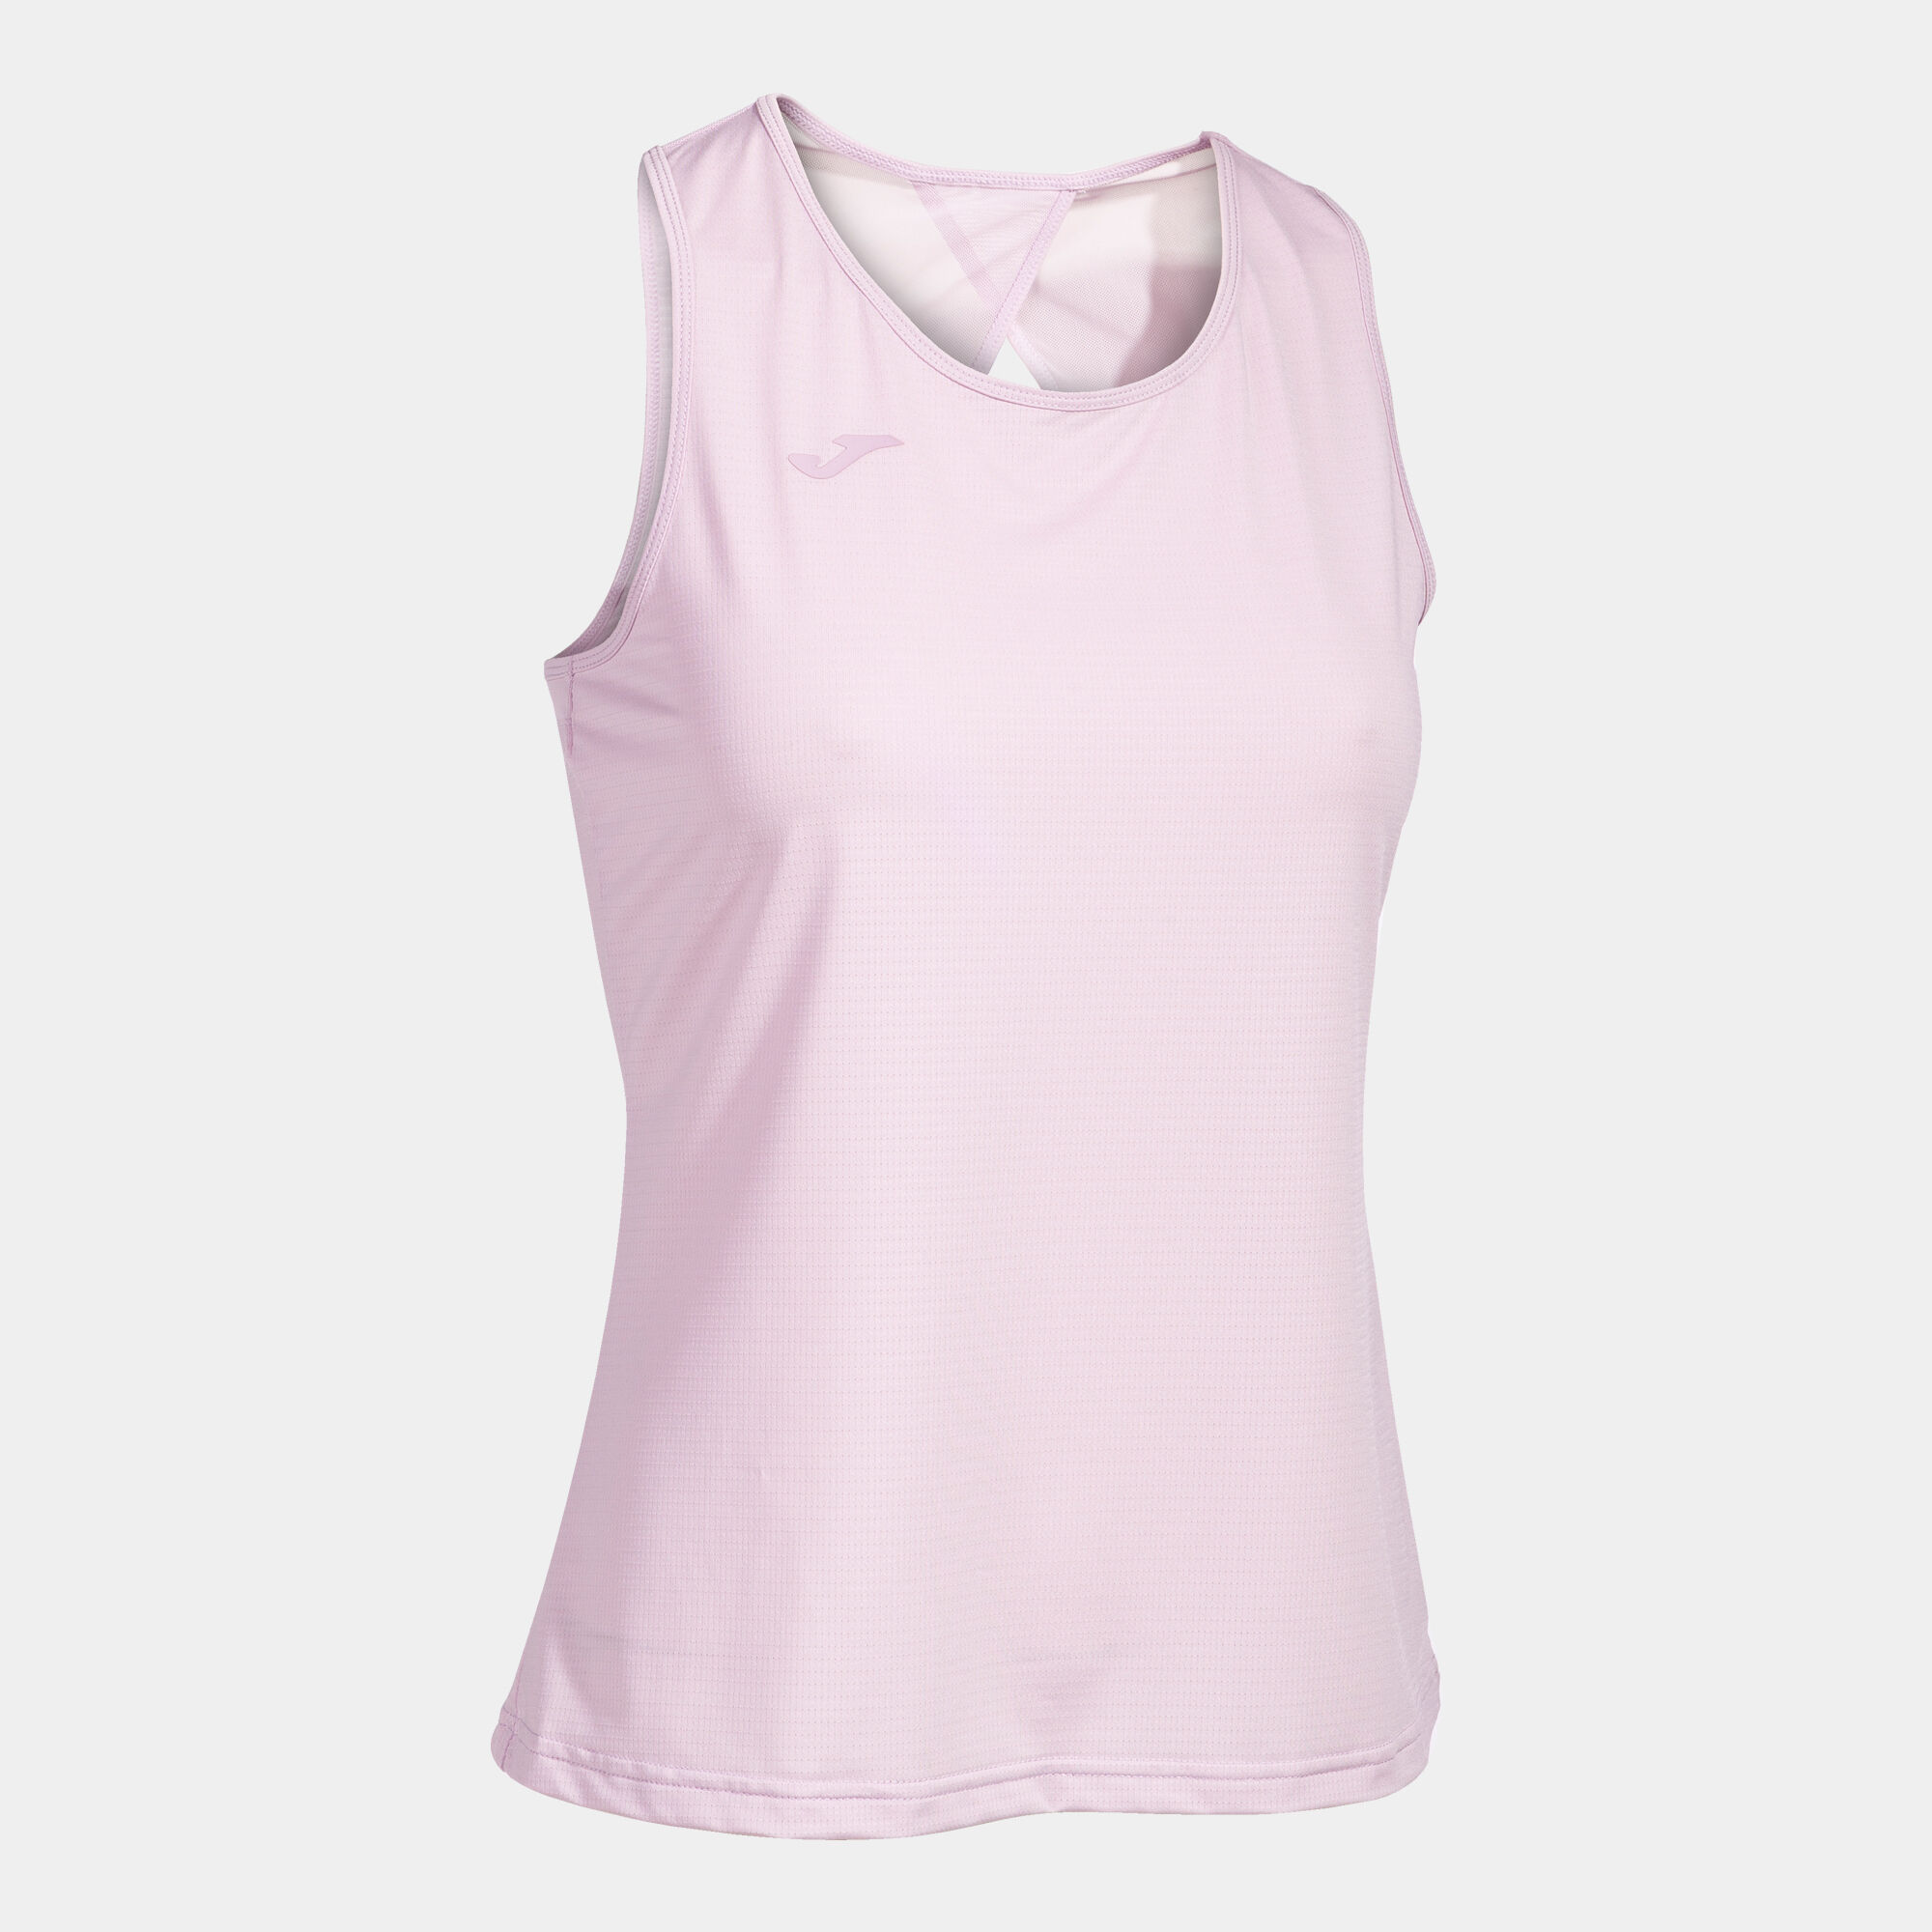 Camiseta Tirantes Mujer Rosa/Blanco